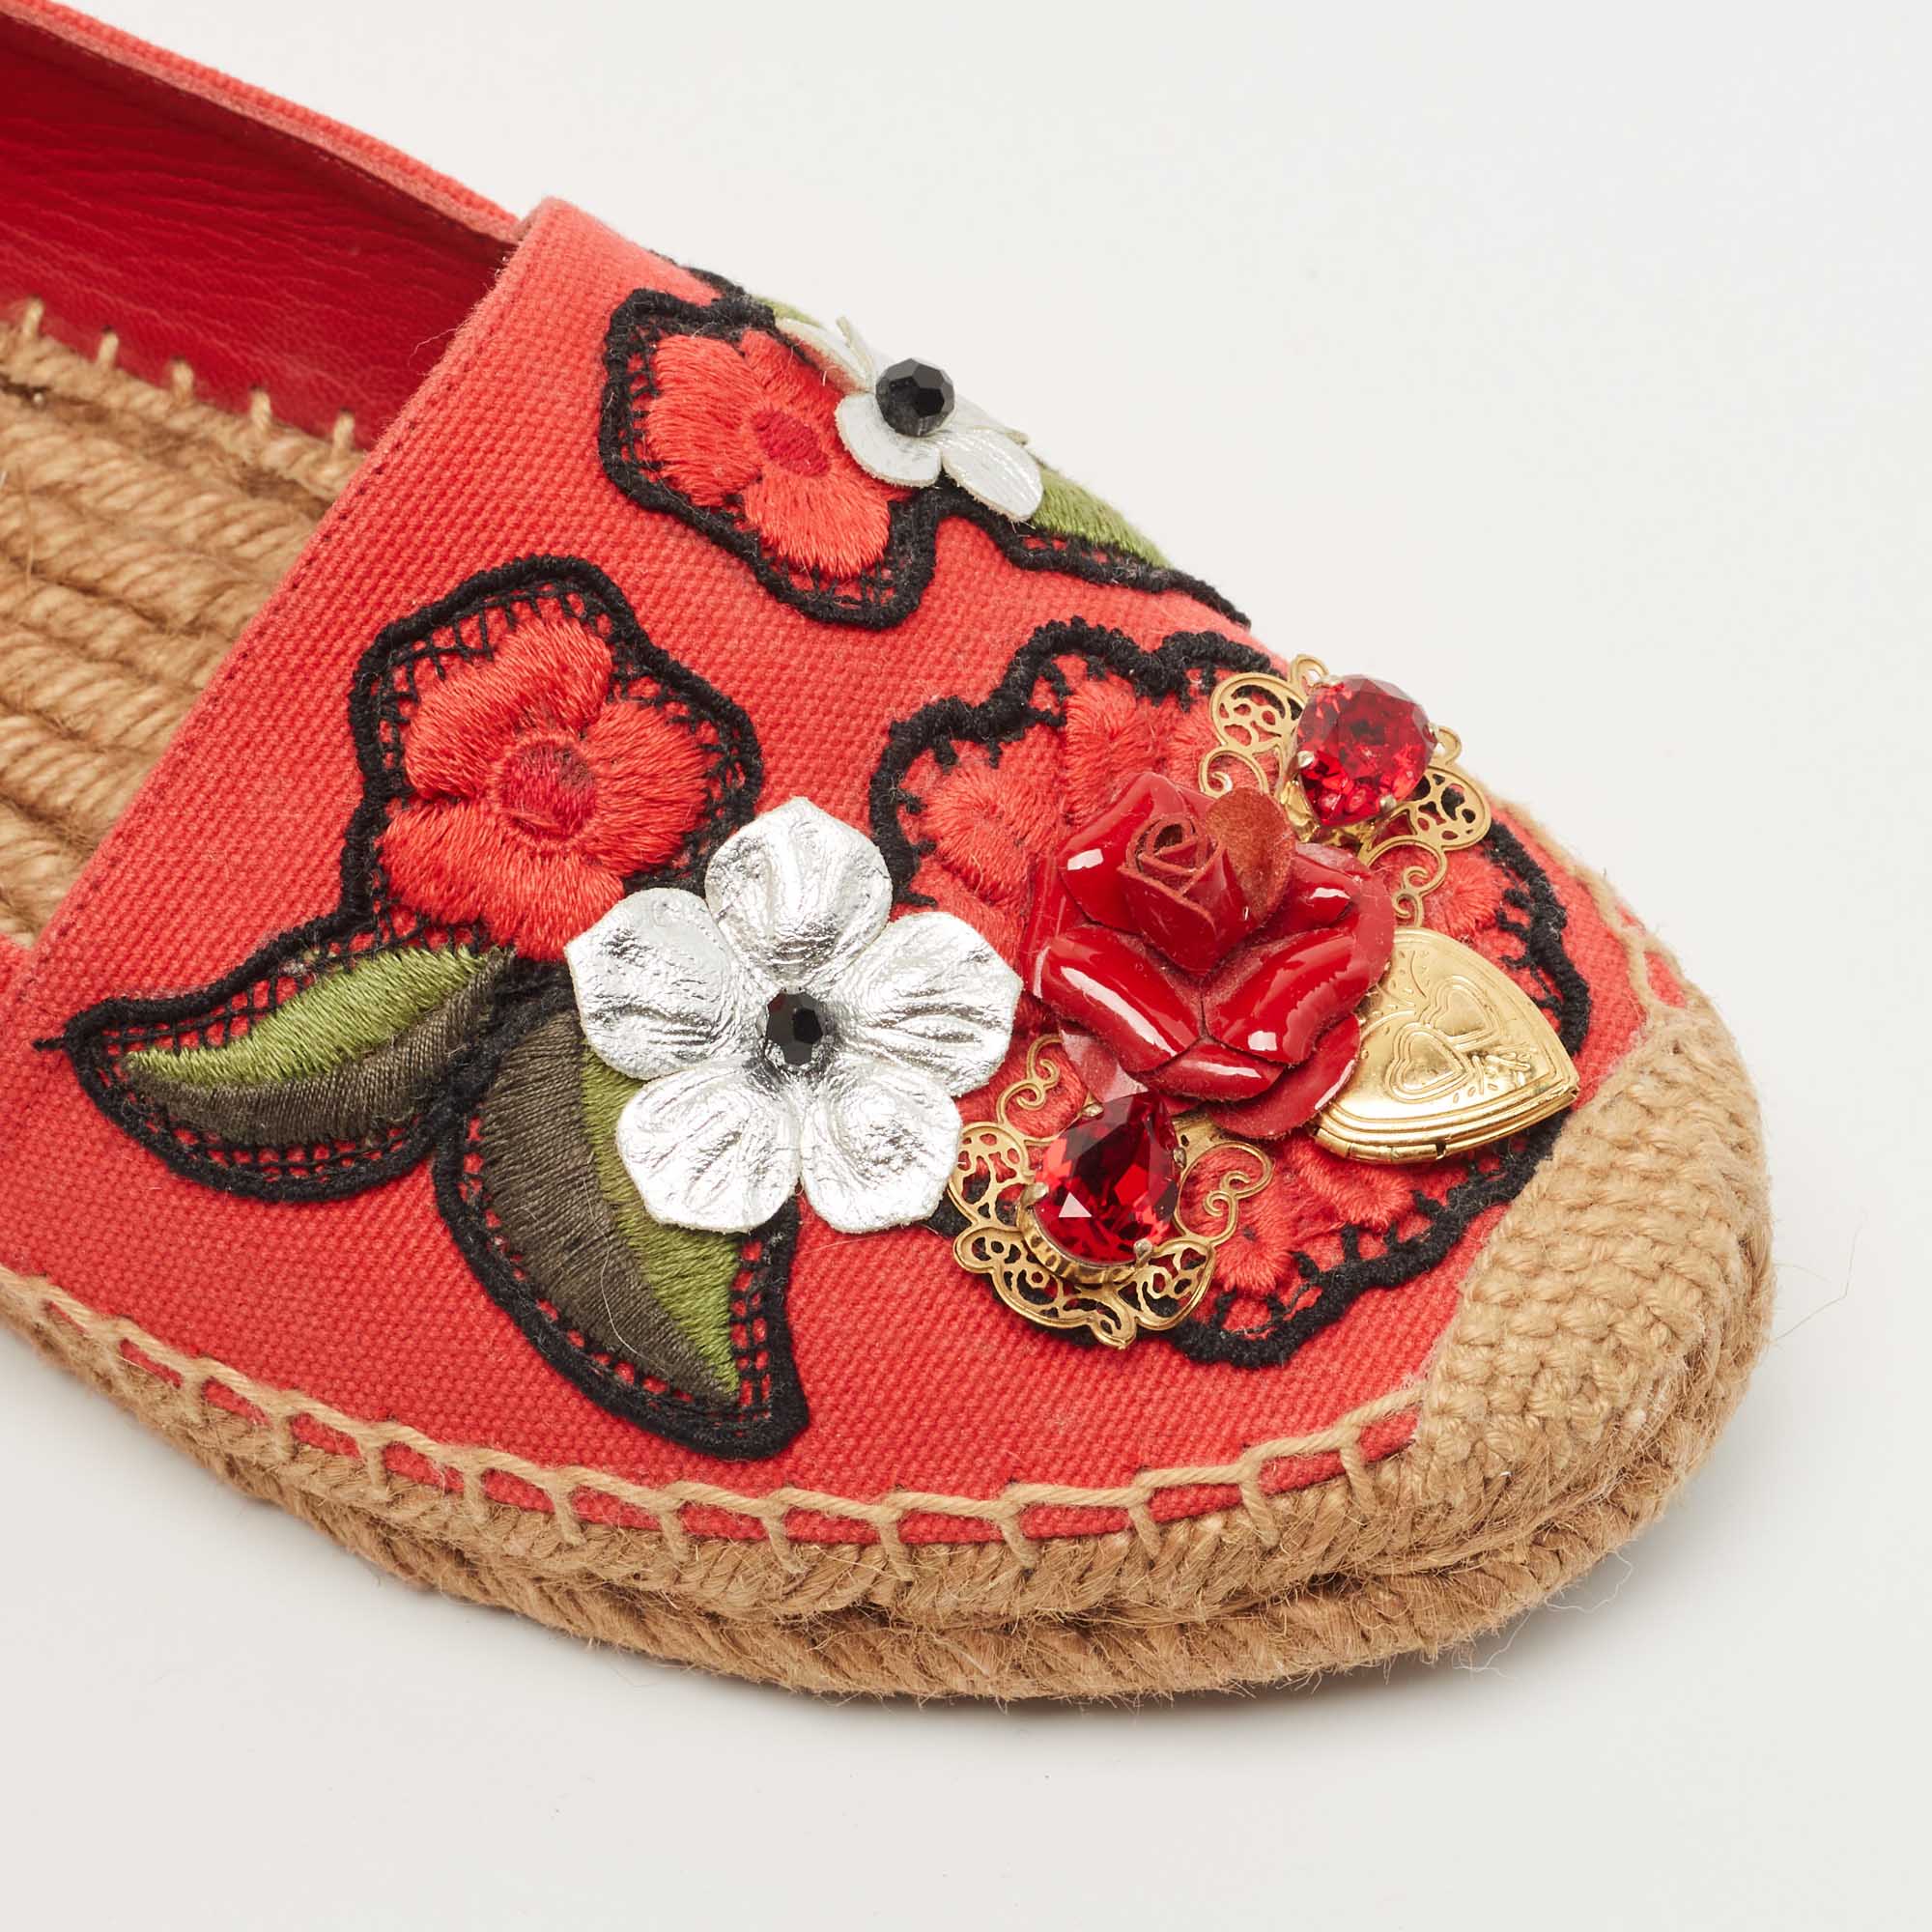 Dolce & Gabbana Red Canvas Locket Flower Jewel Embroidered Espadrilles Flats Size 37